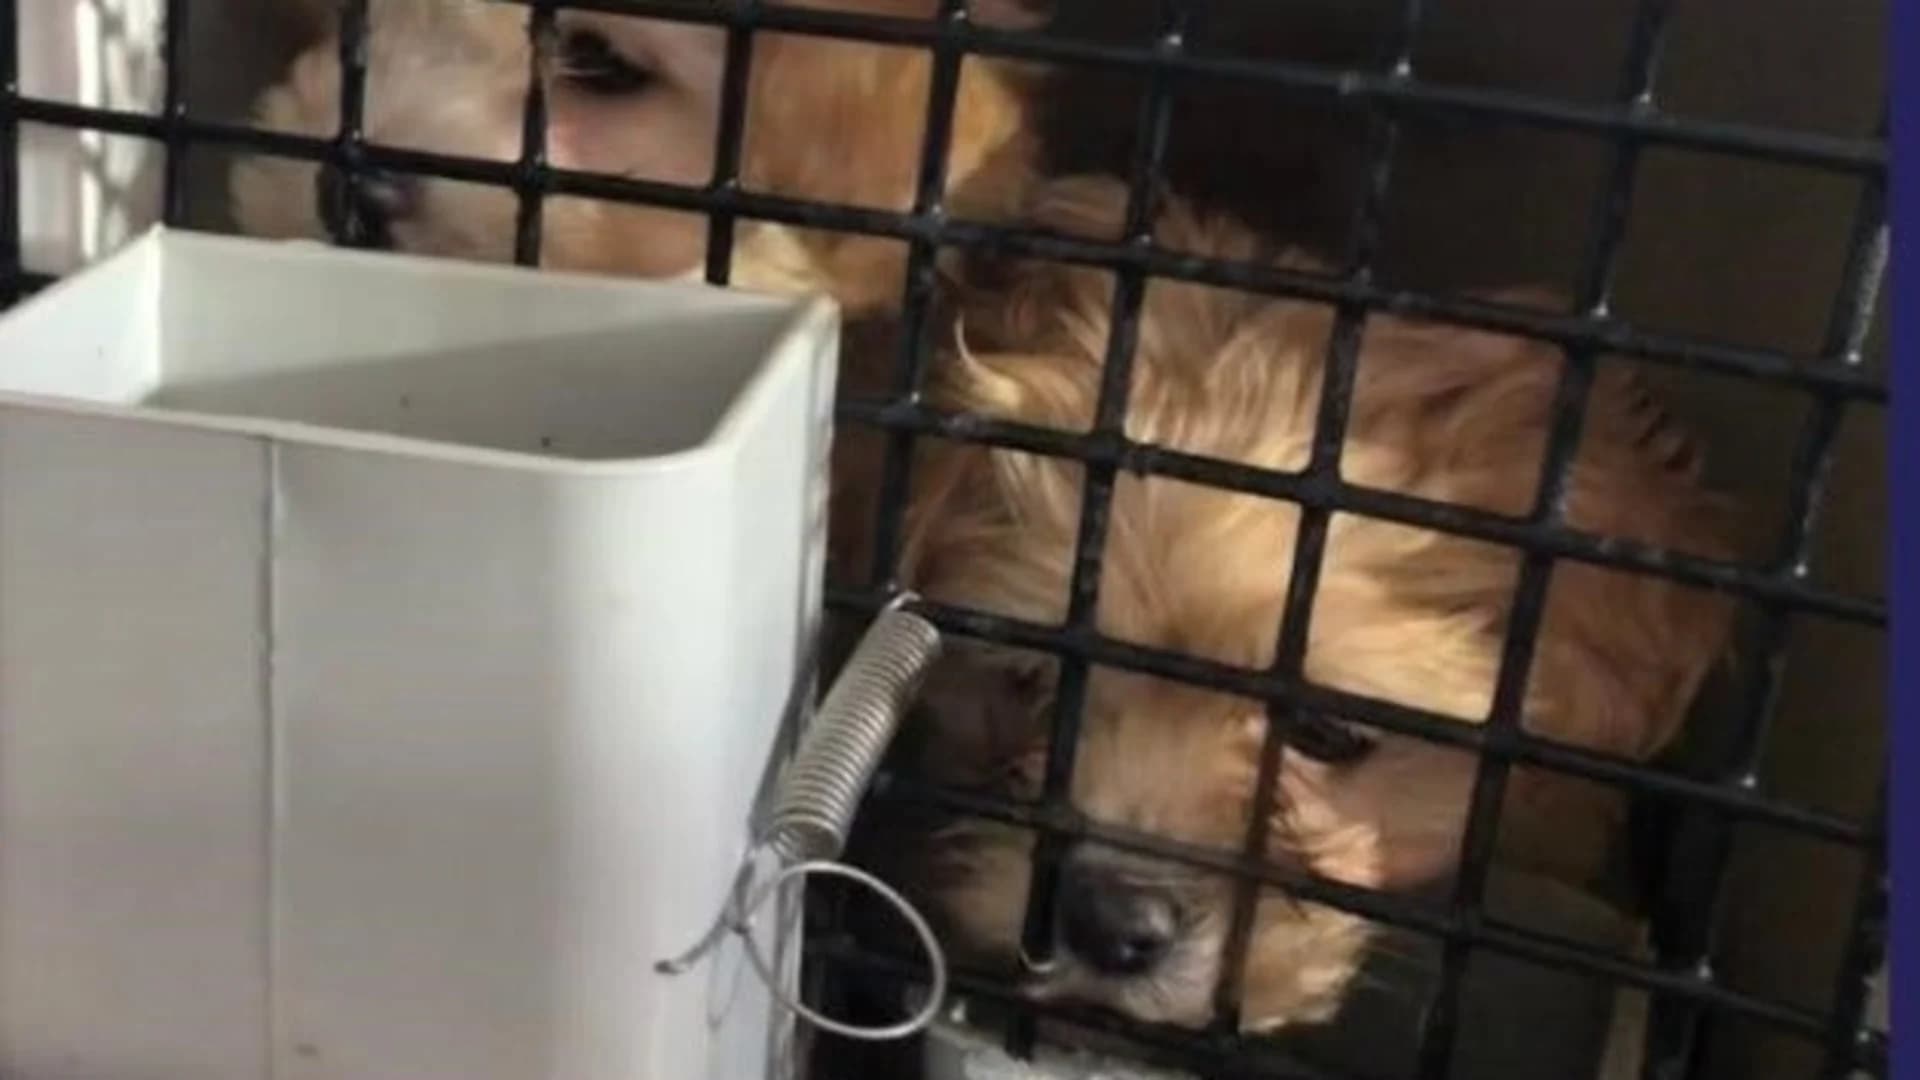 Nassau SPCA: Uptick in reports of sick puppies being sold